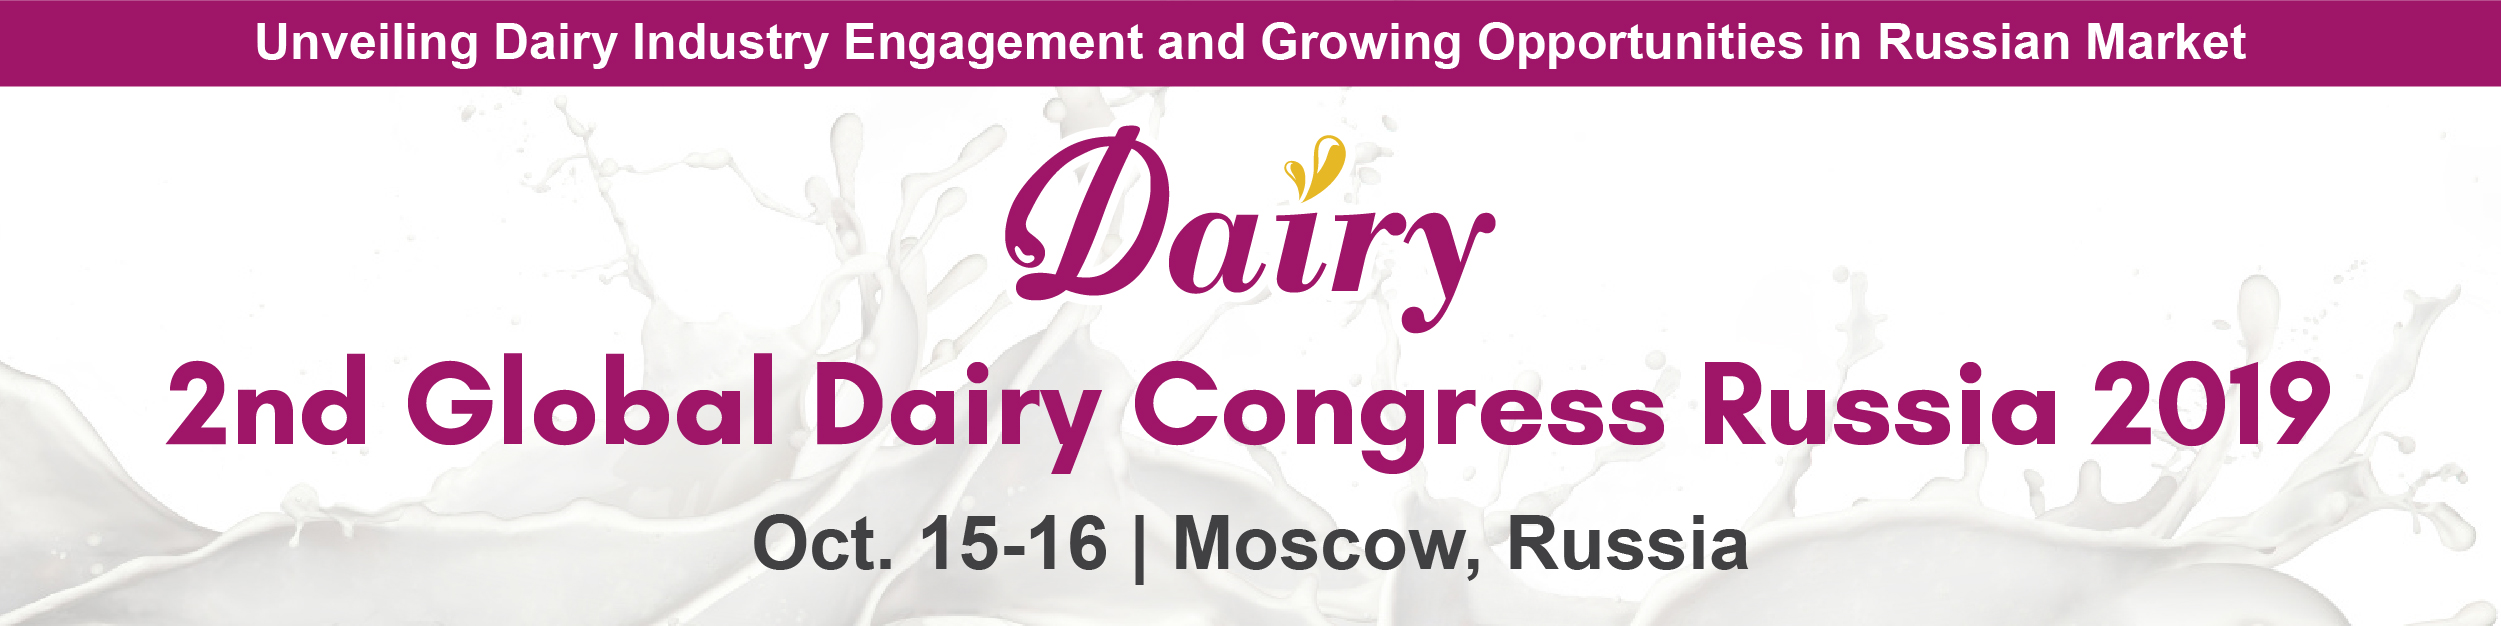 2nd Global Dairy Congress Russia 2019